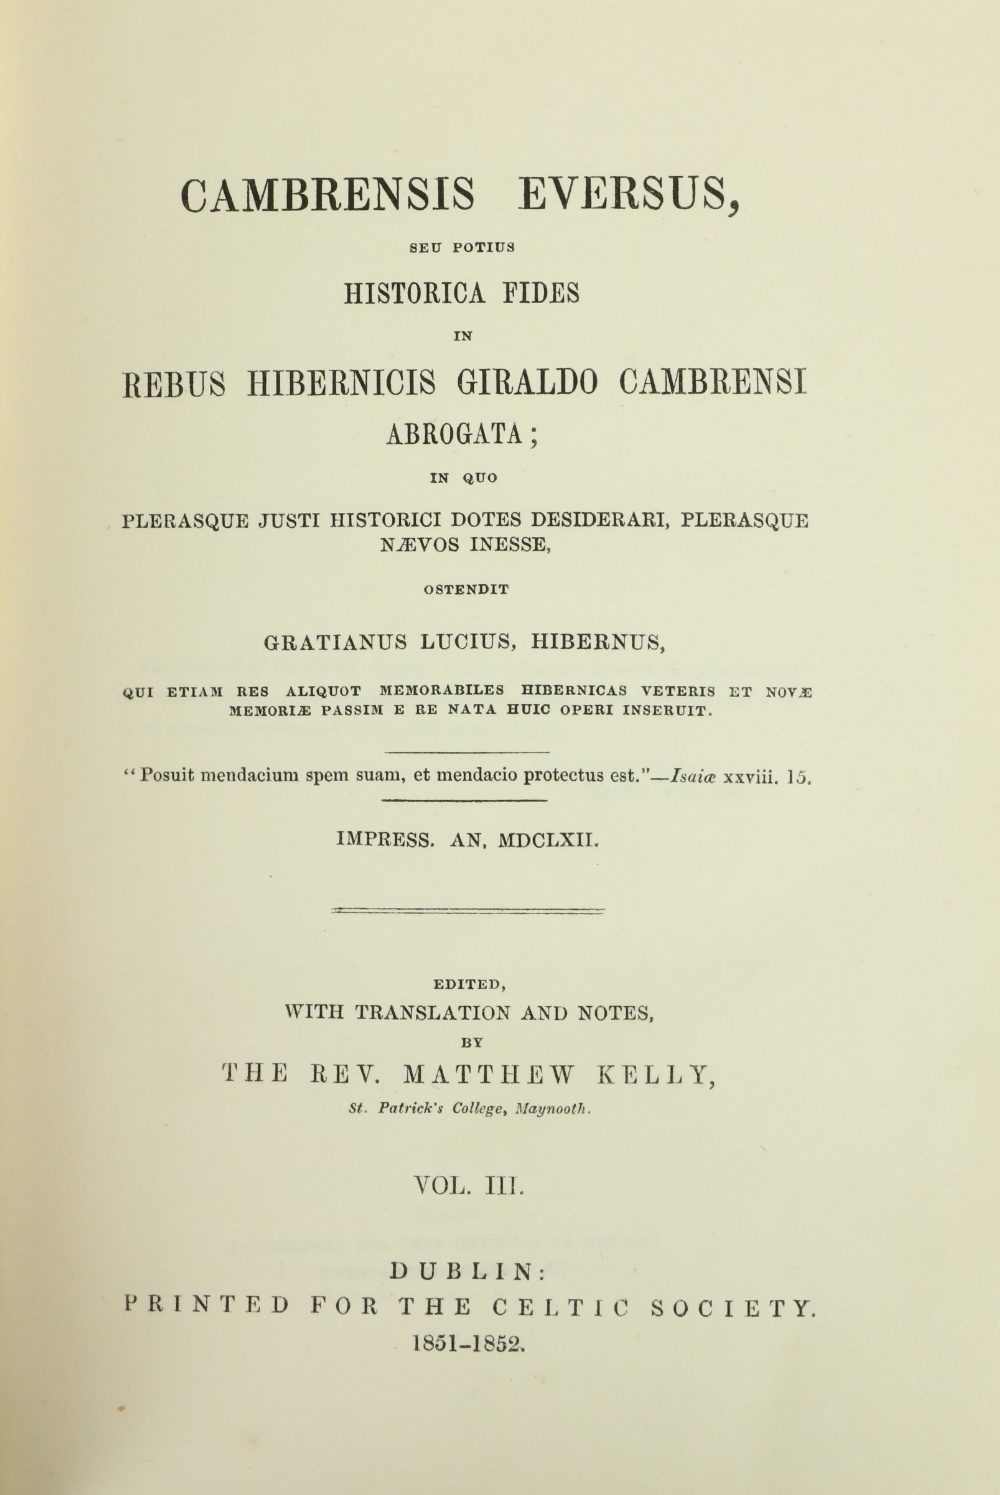 Celtic Society: Kelly (Rev. M.)ed. Cambrensis Eversus, seu Potuis Historica Fides in Rebus